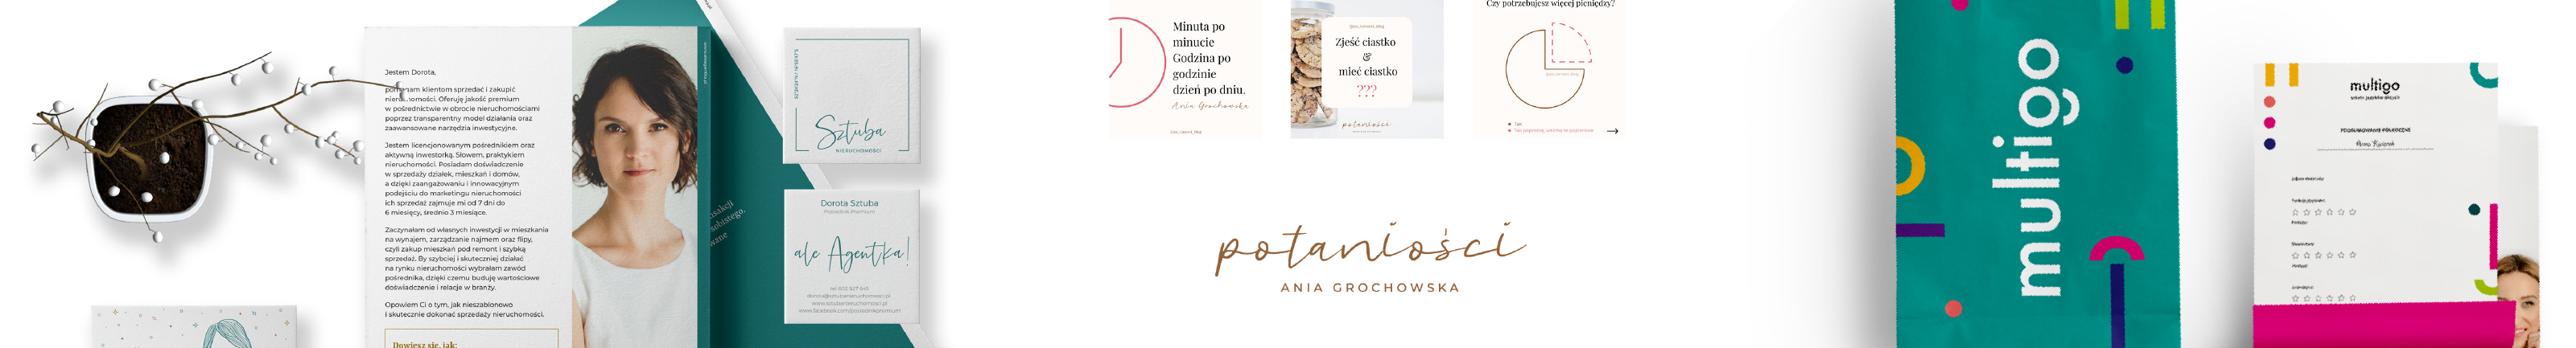 Dorota Zborowska's profile banner